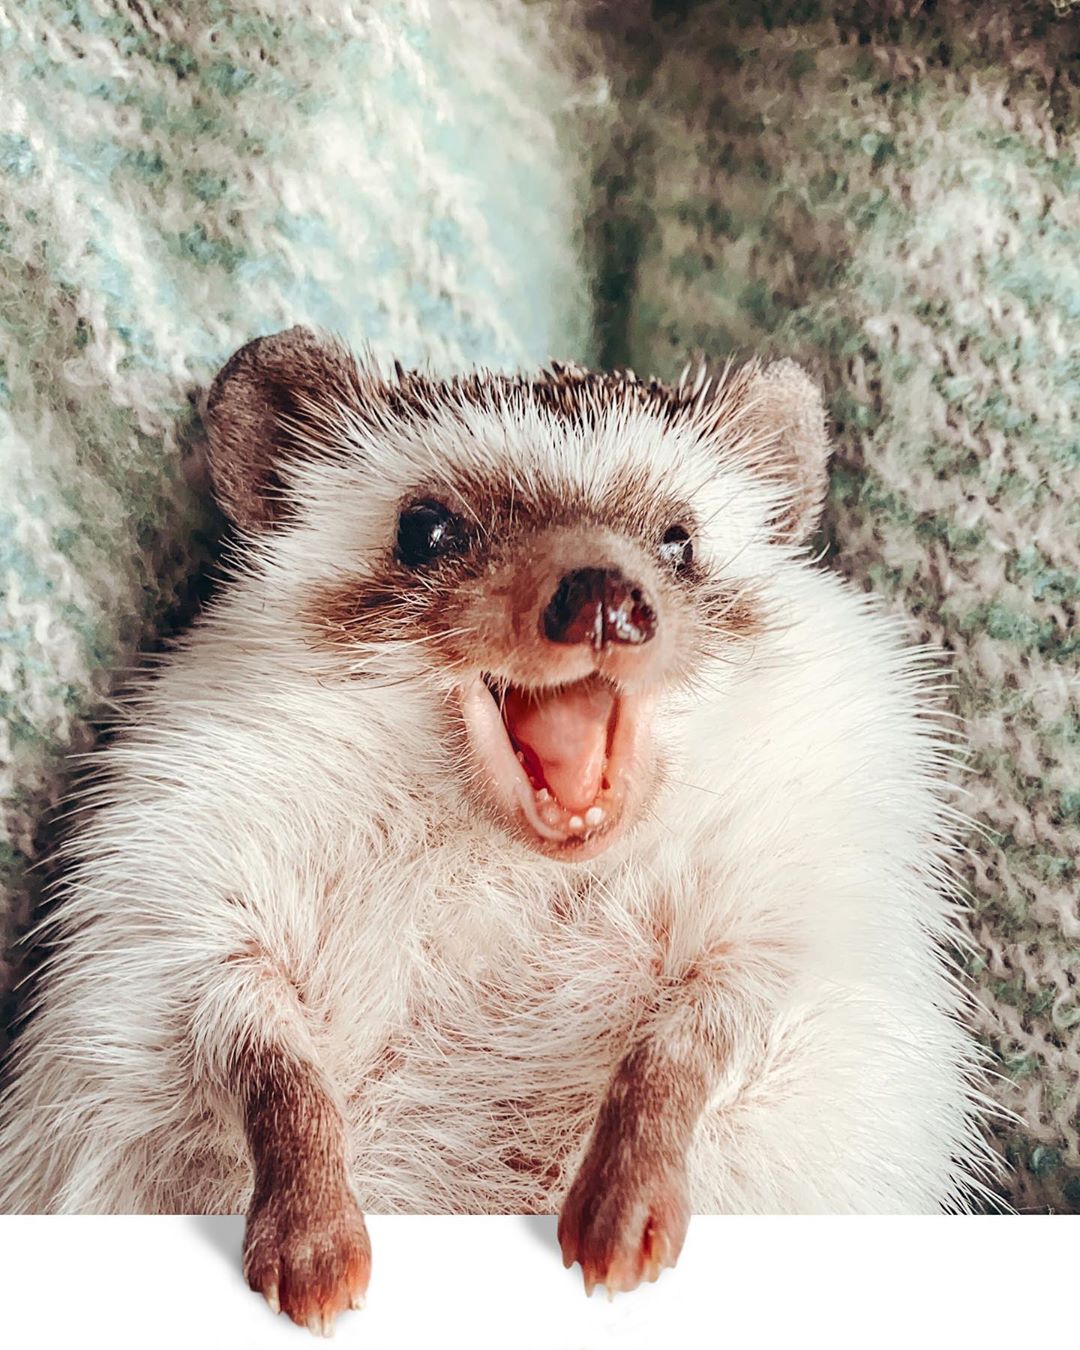 Hedgehog is a photo model